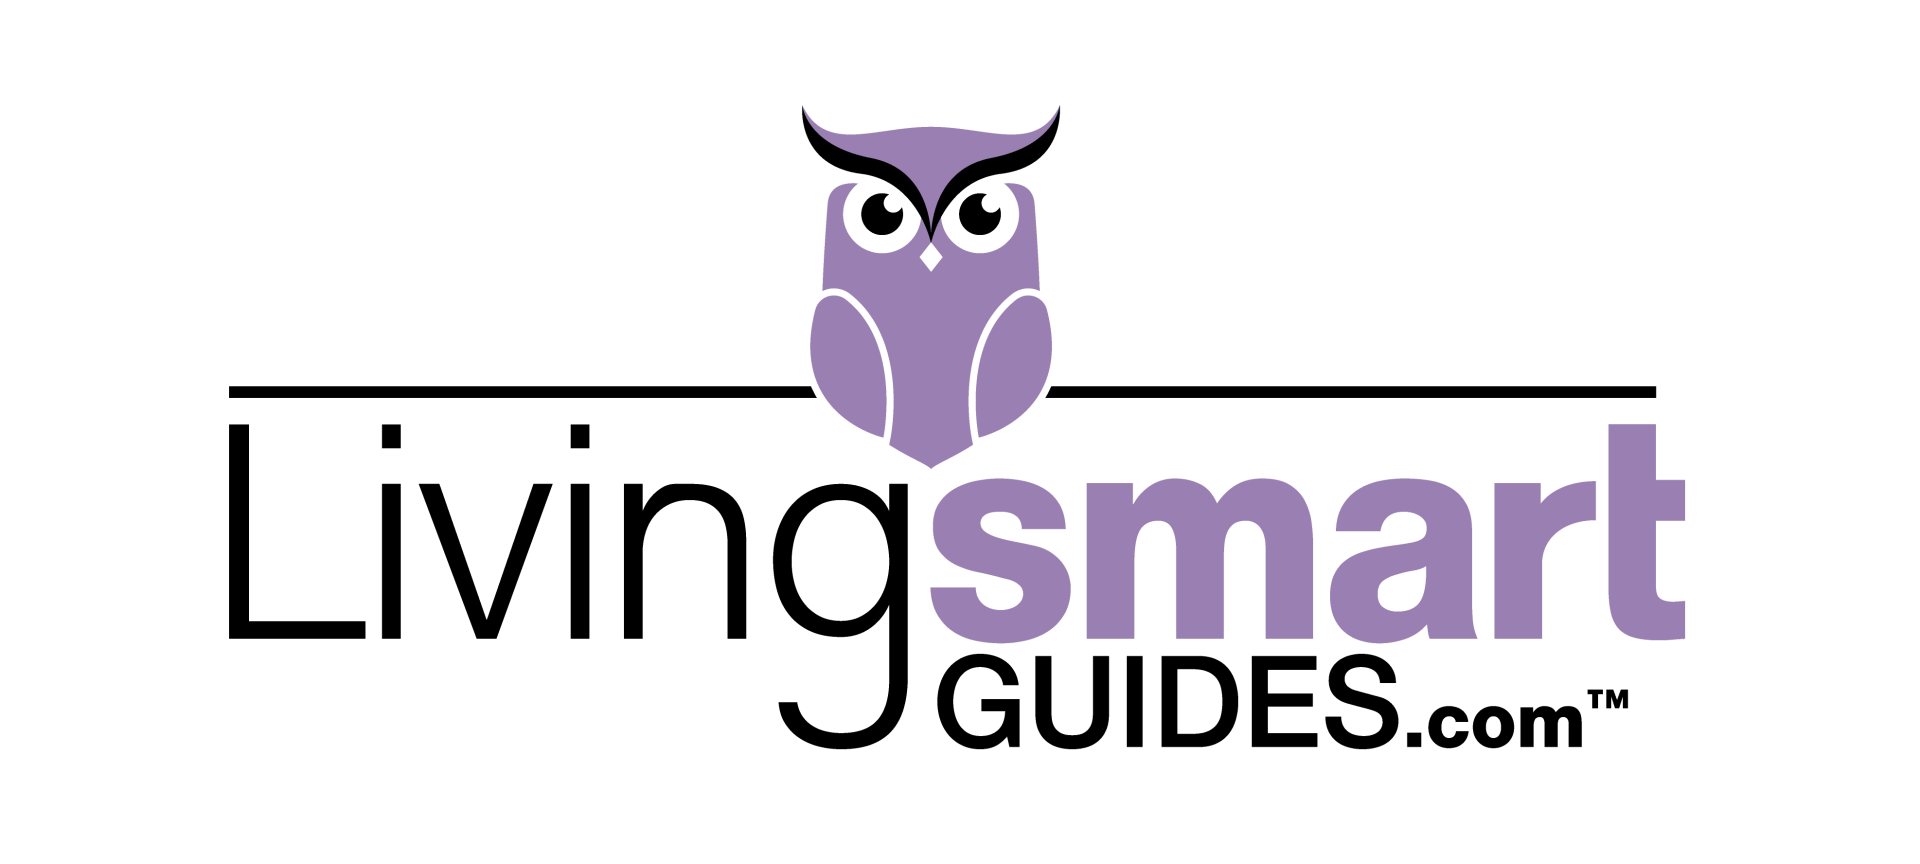 Living Smart Guides